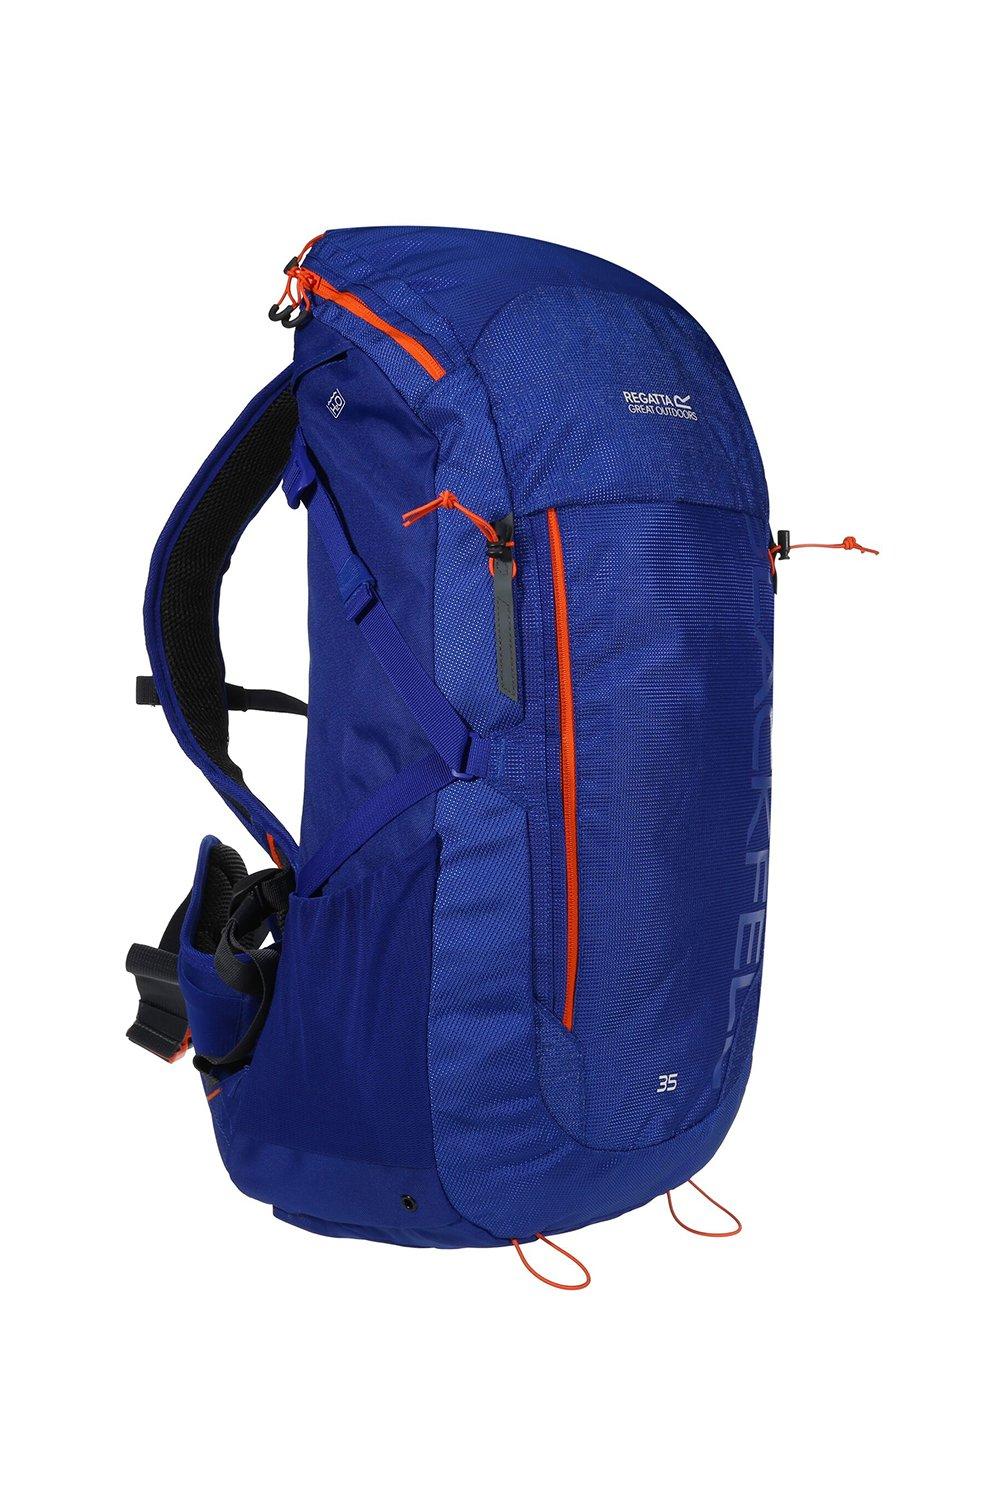 Прочный туристический рюкзак Blackfell III 35L Regatta, синий